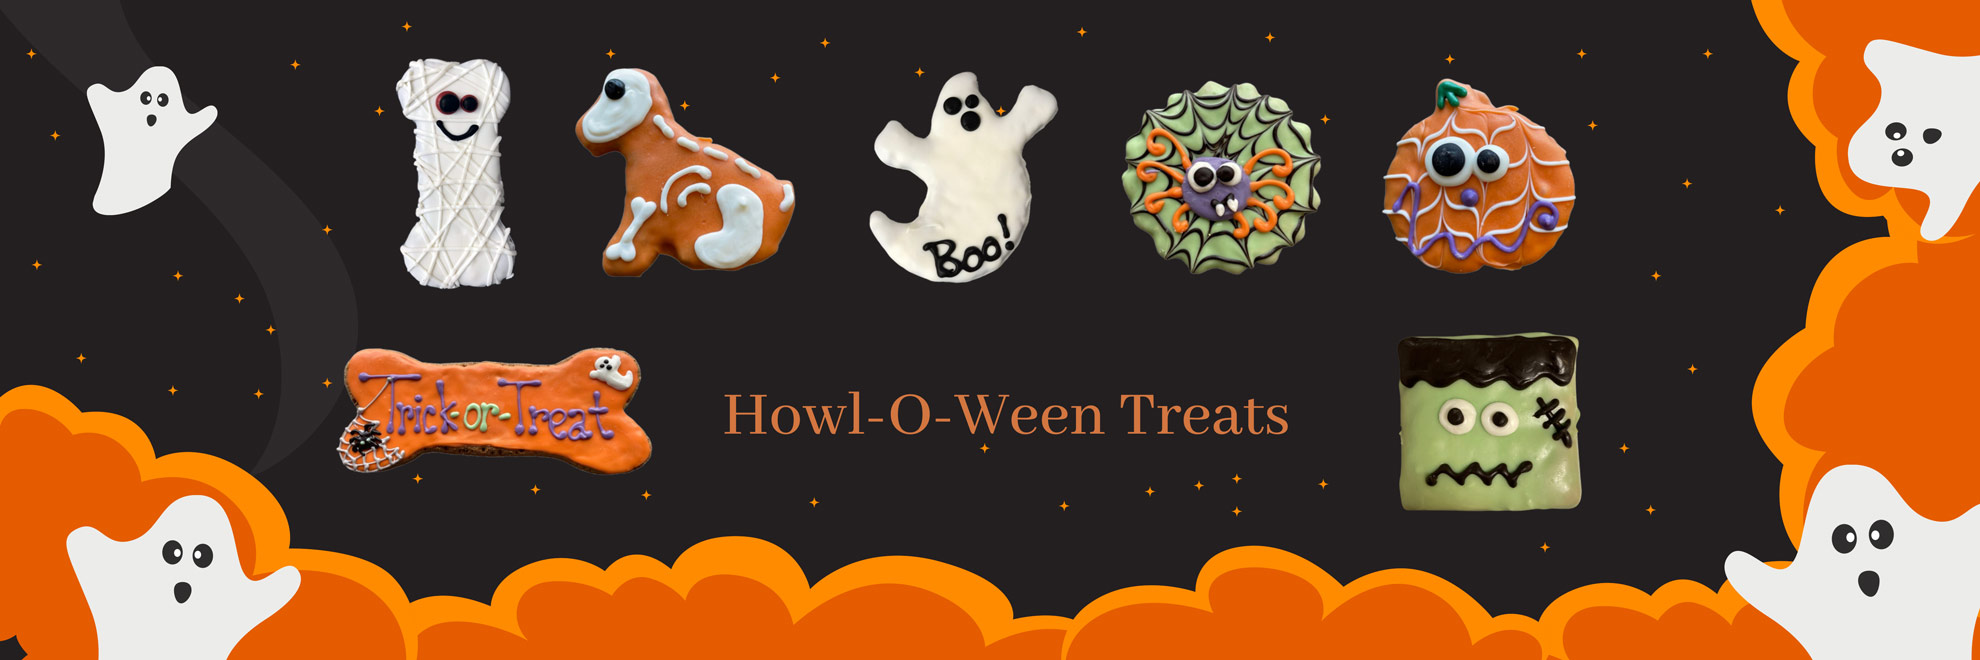 Halloween Dog Cookies & Treats